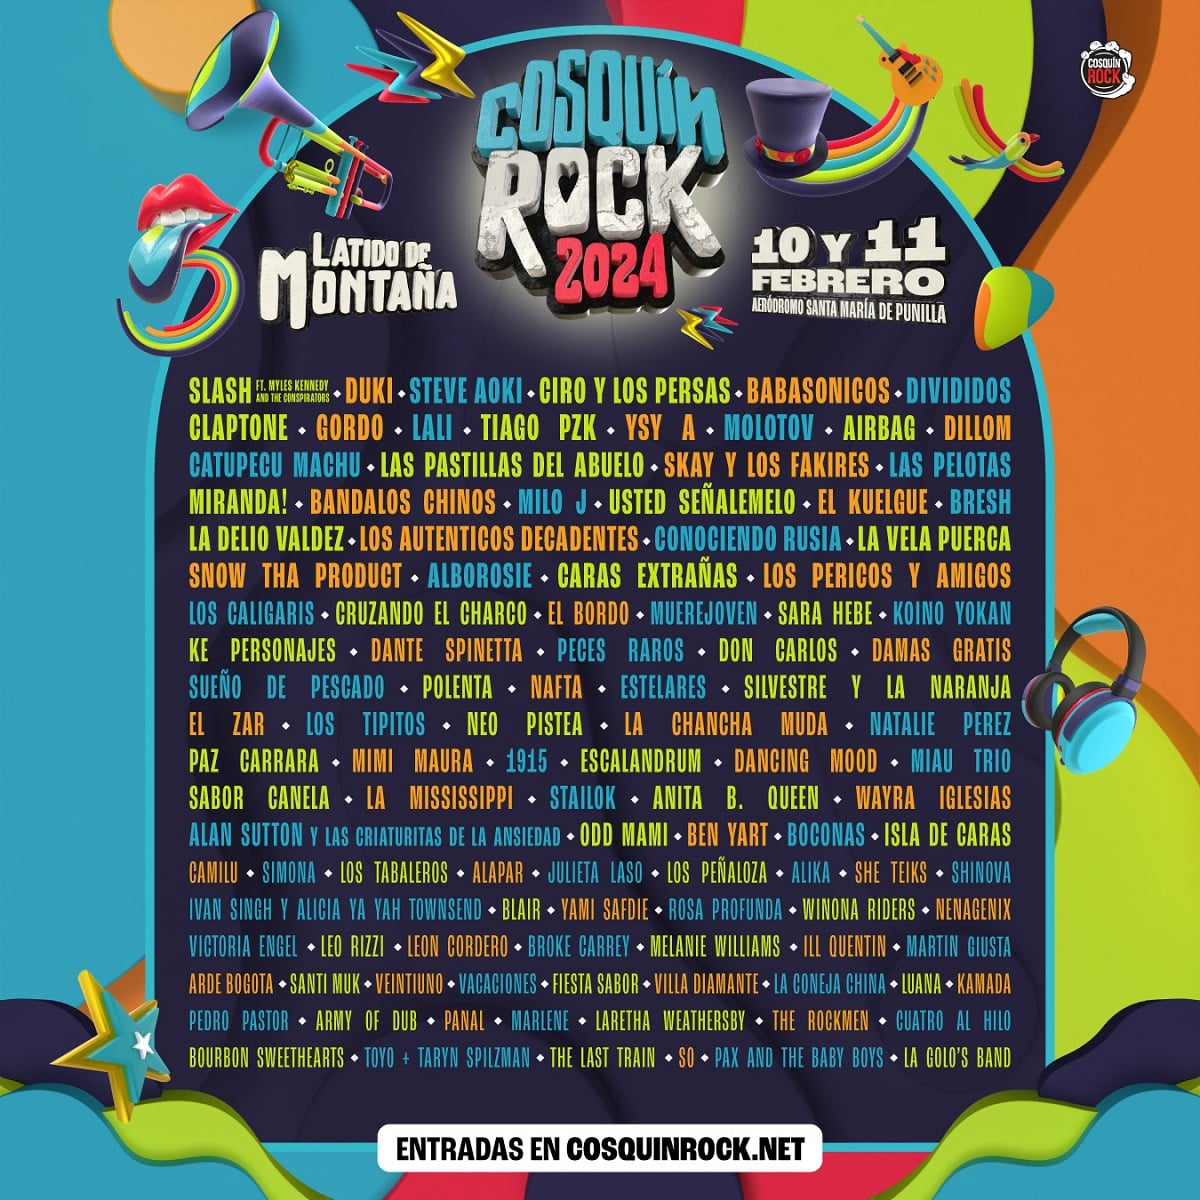 el line up completo del festival cosquin rock 2024